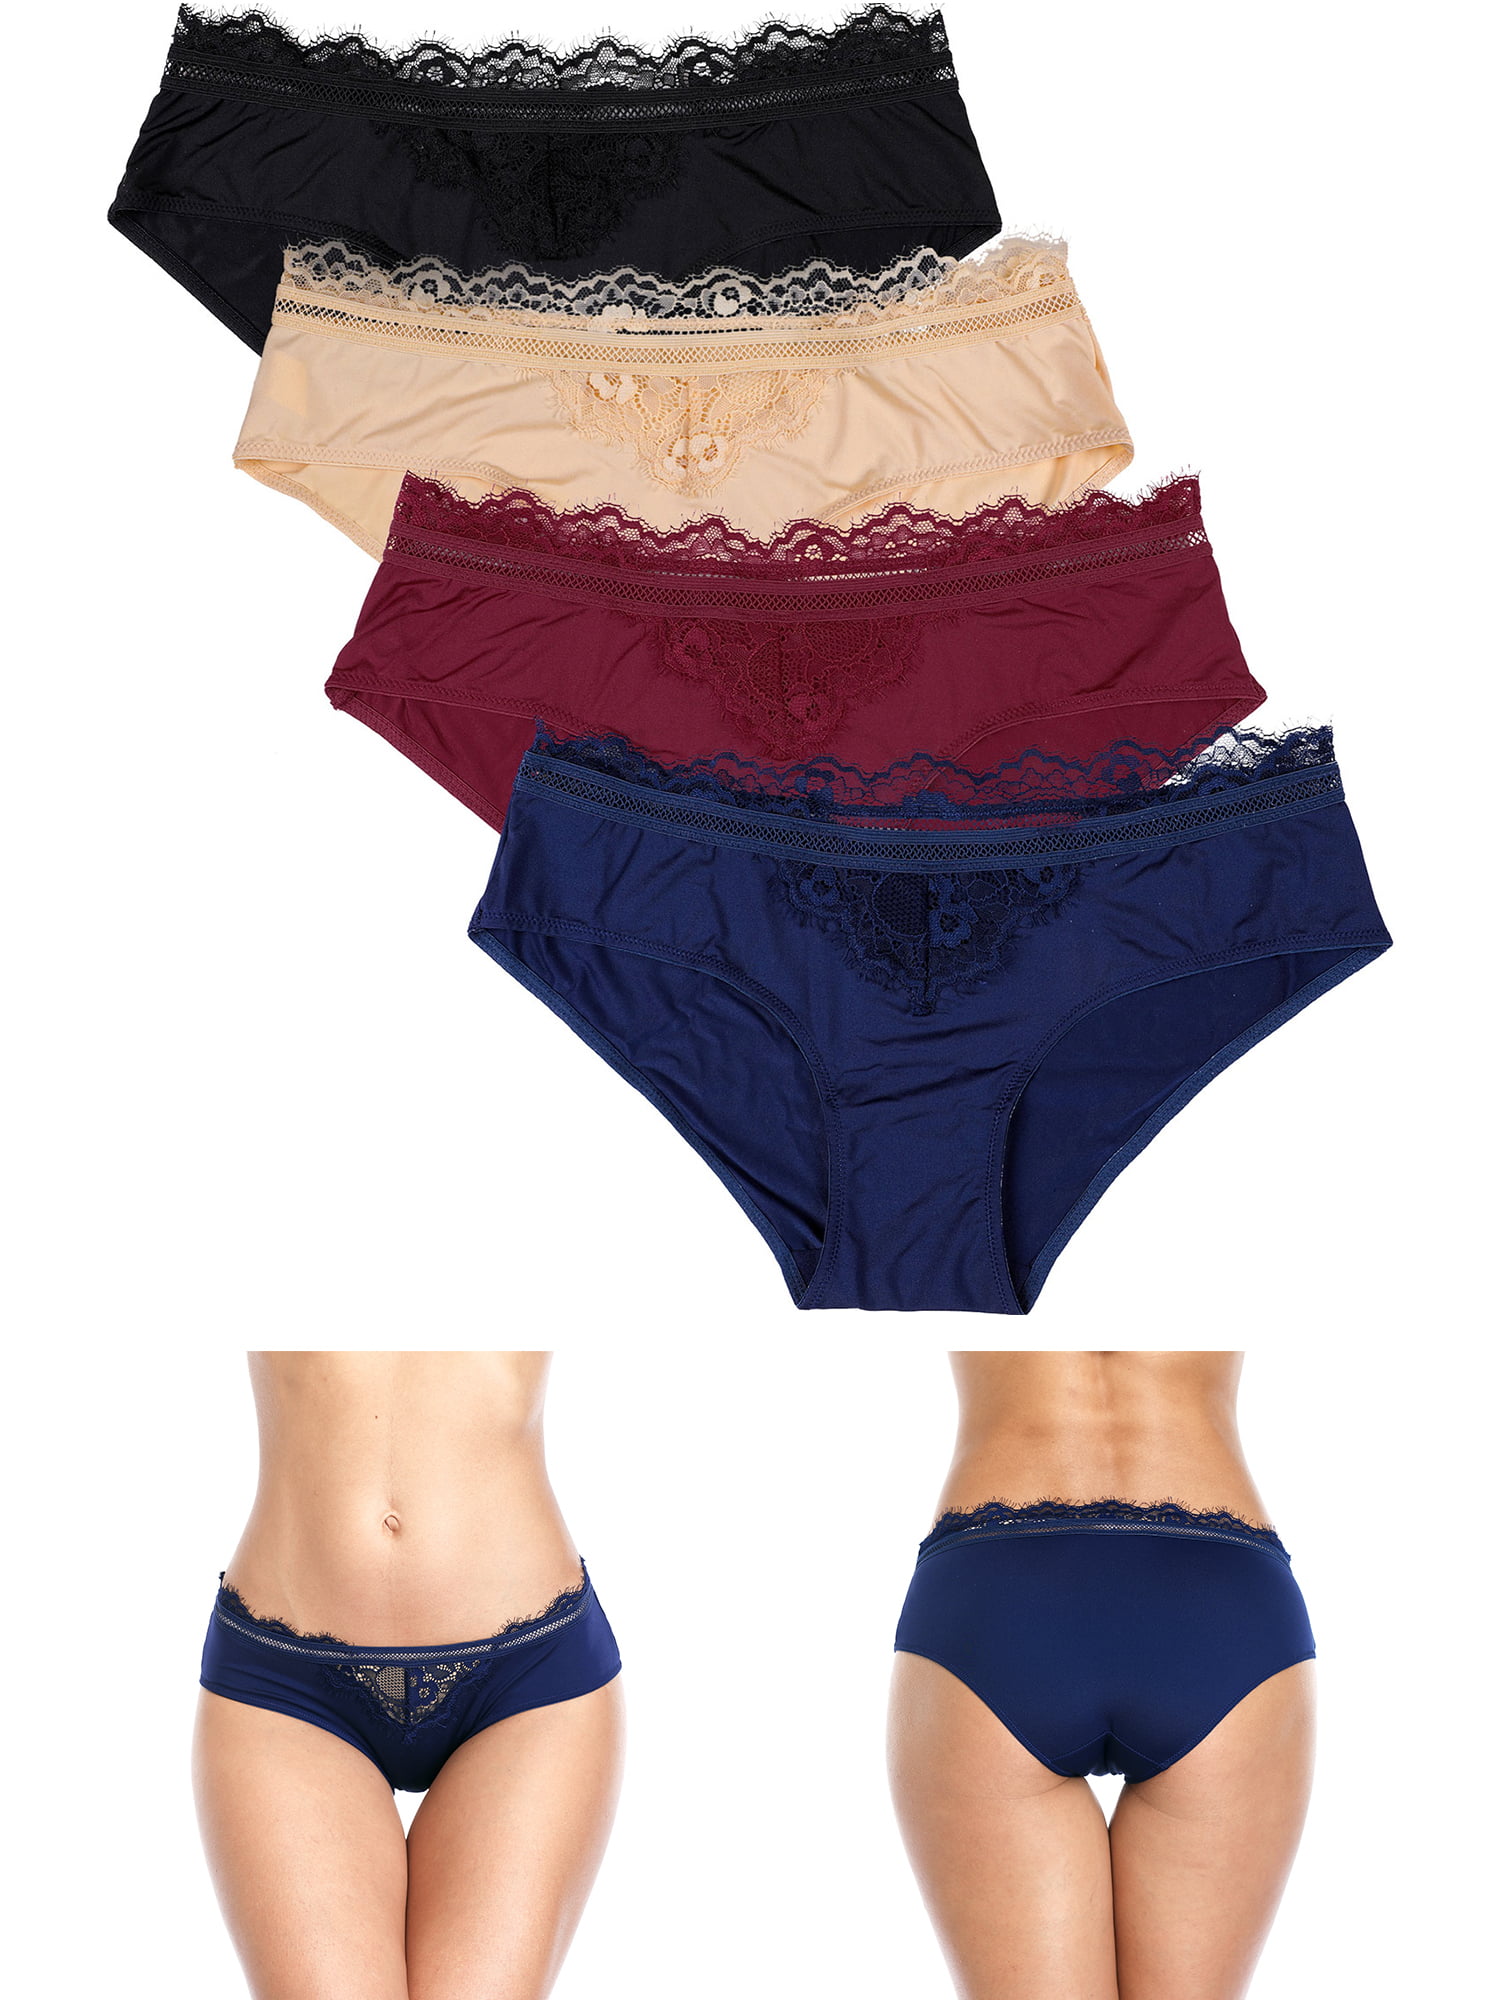 Charmo Women S Lace Trim Hipster Panties Nylon Bikini Brief Underwear 4